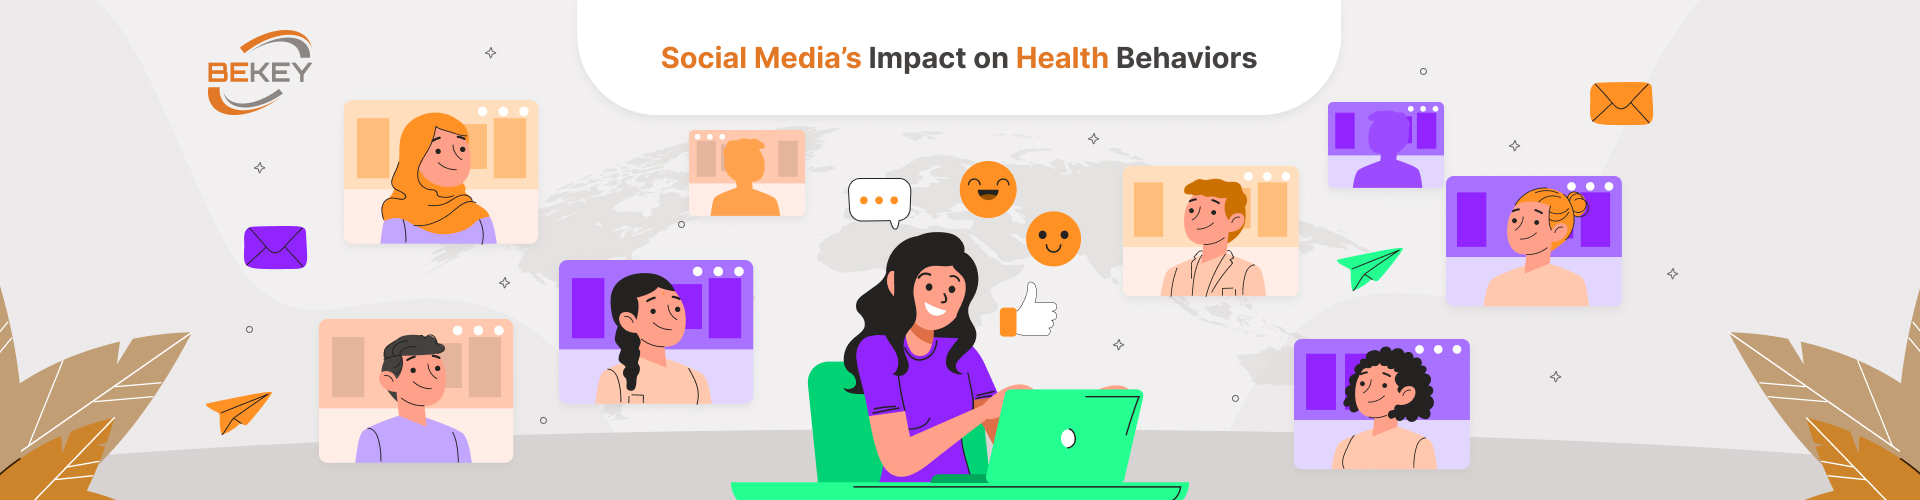 Social Media’s Impact on Health Behaviors - image